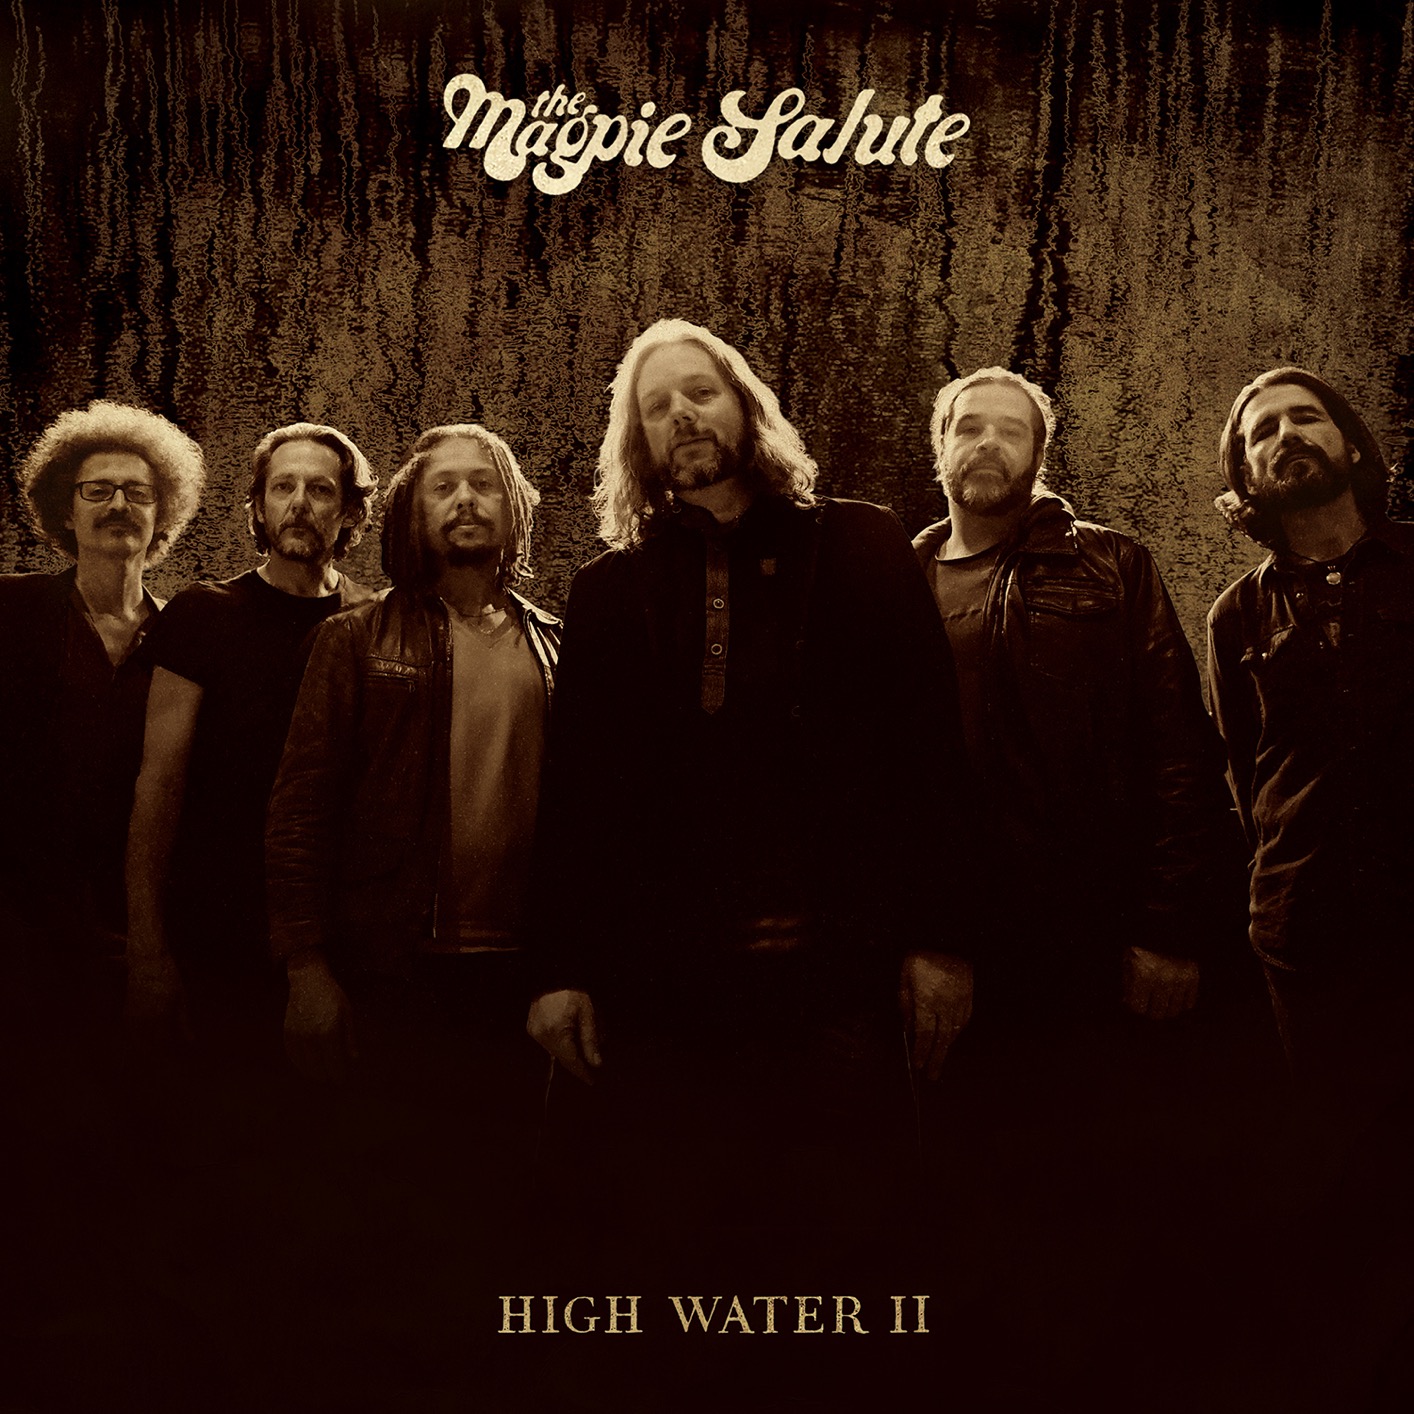 The Magpie Salute - High Water II (2019) [FLAC 24bit/48kHz]